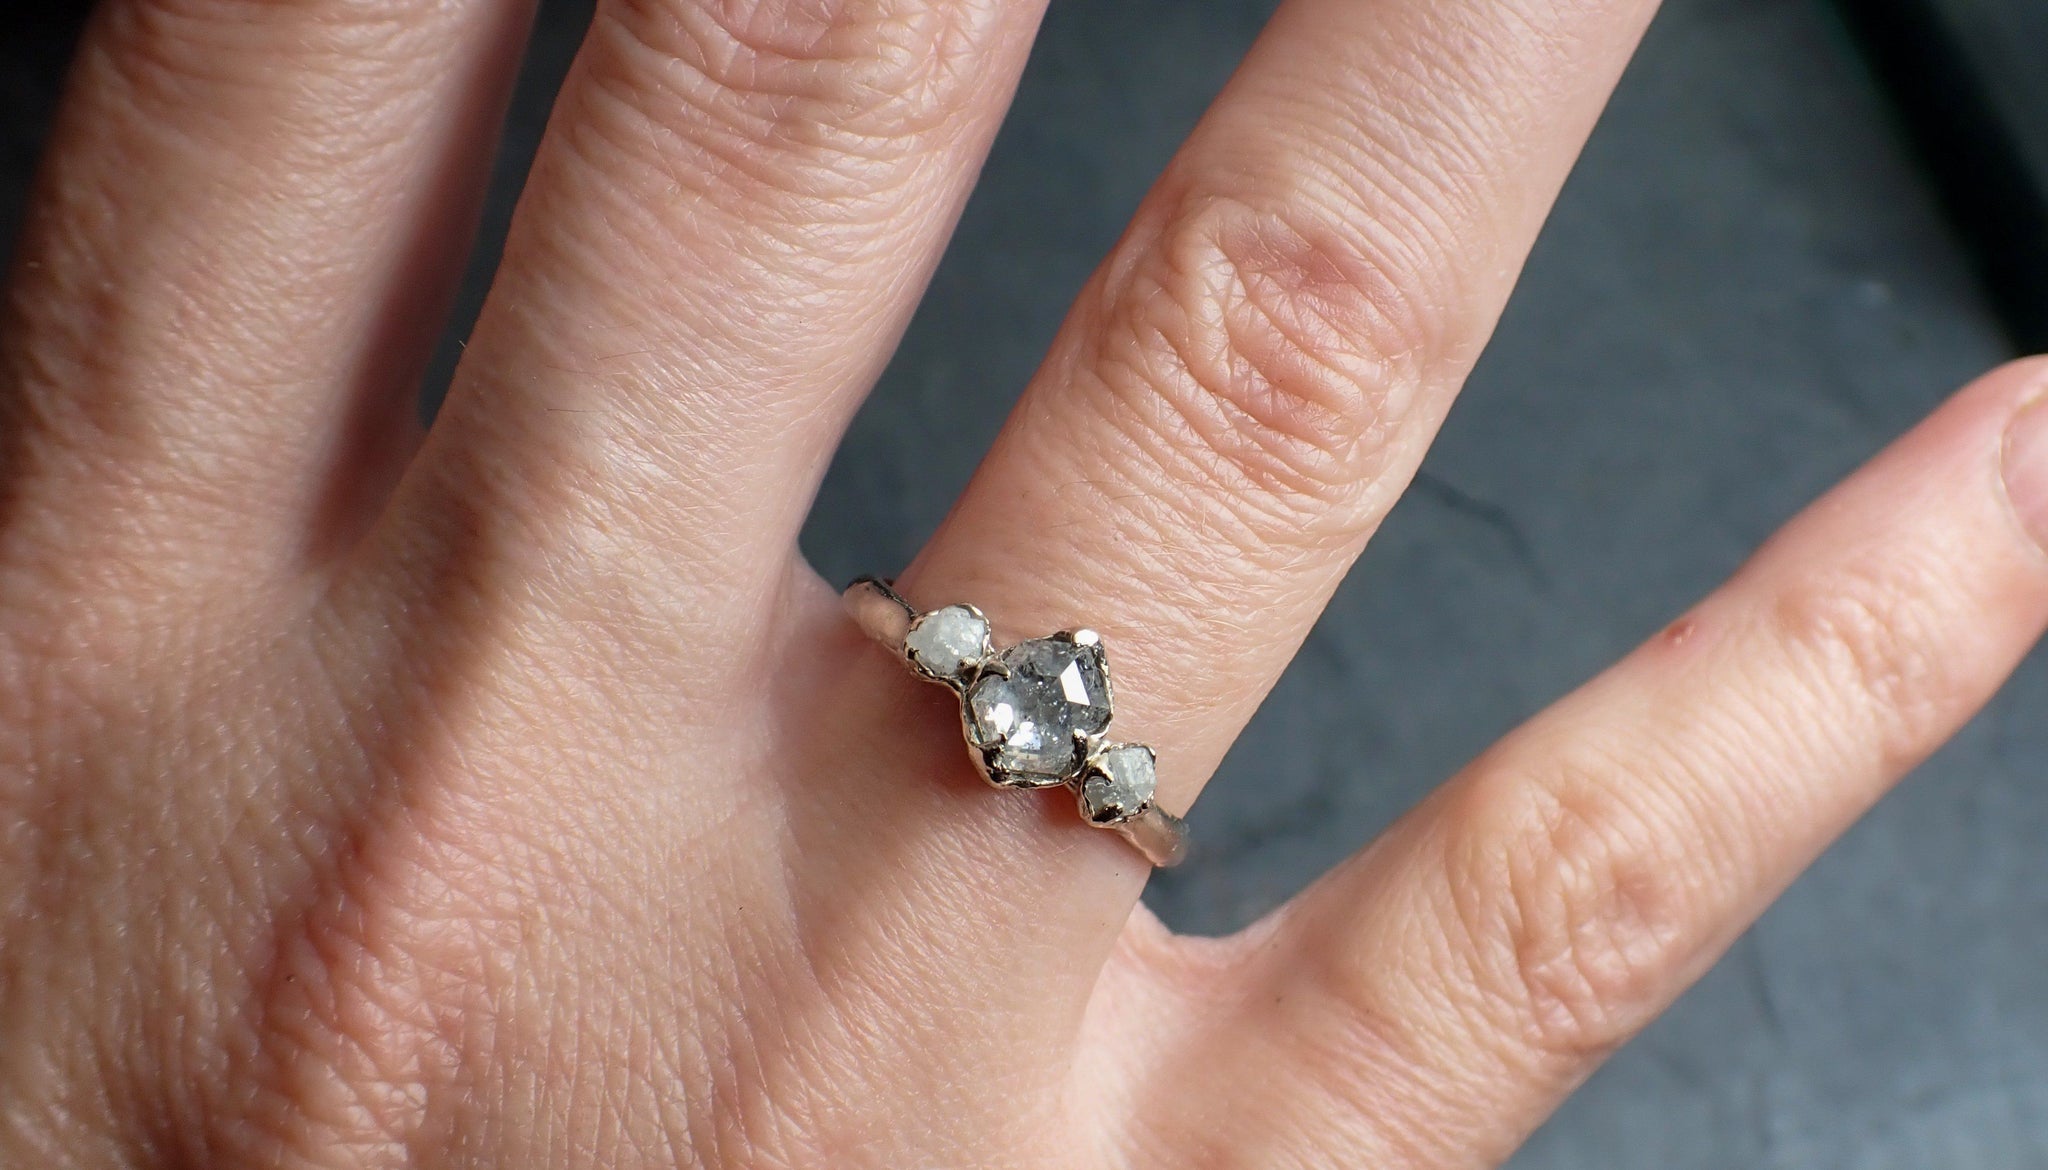 fancy cut salt and pepper diamond multi stone engagement 14k white gold wedding ring rough diamond ring byangeline 2279 Alternative Engagement